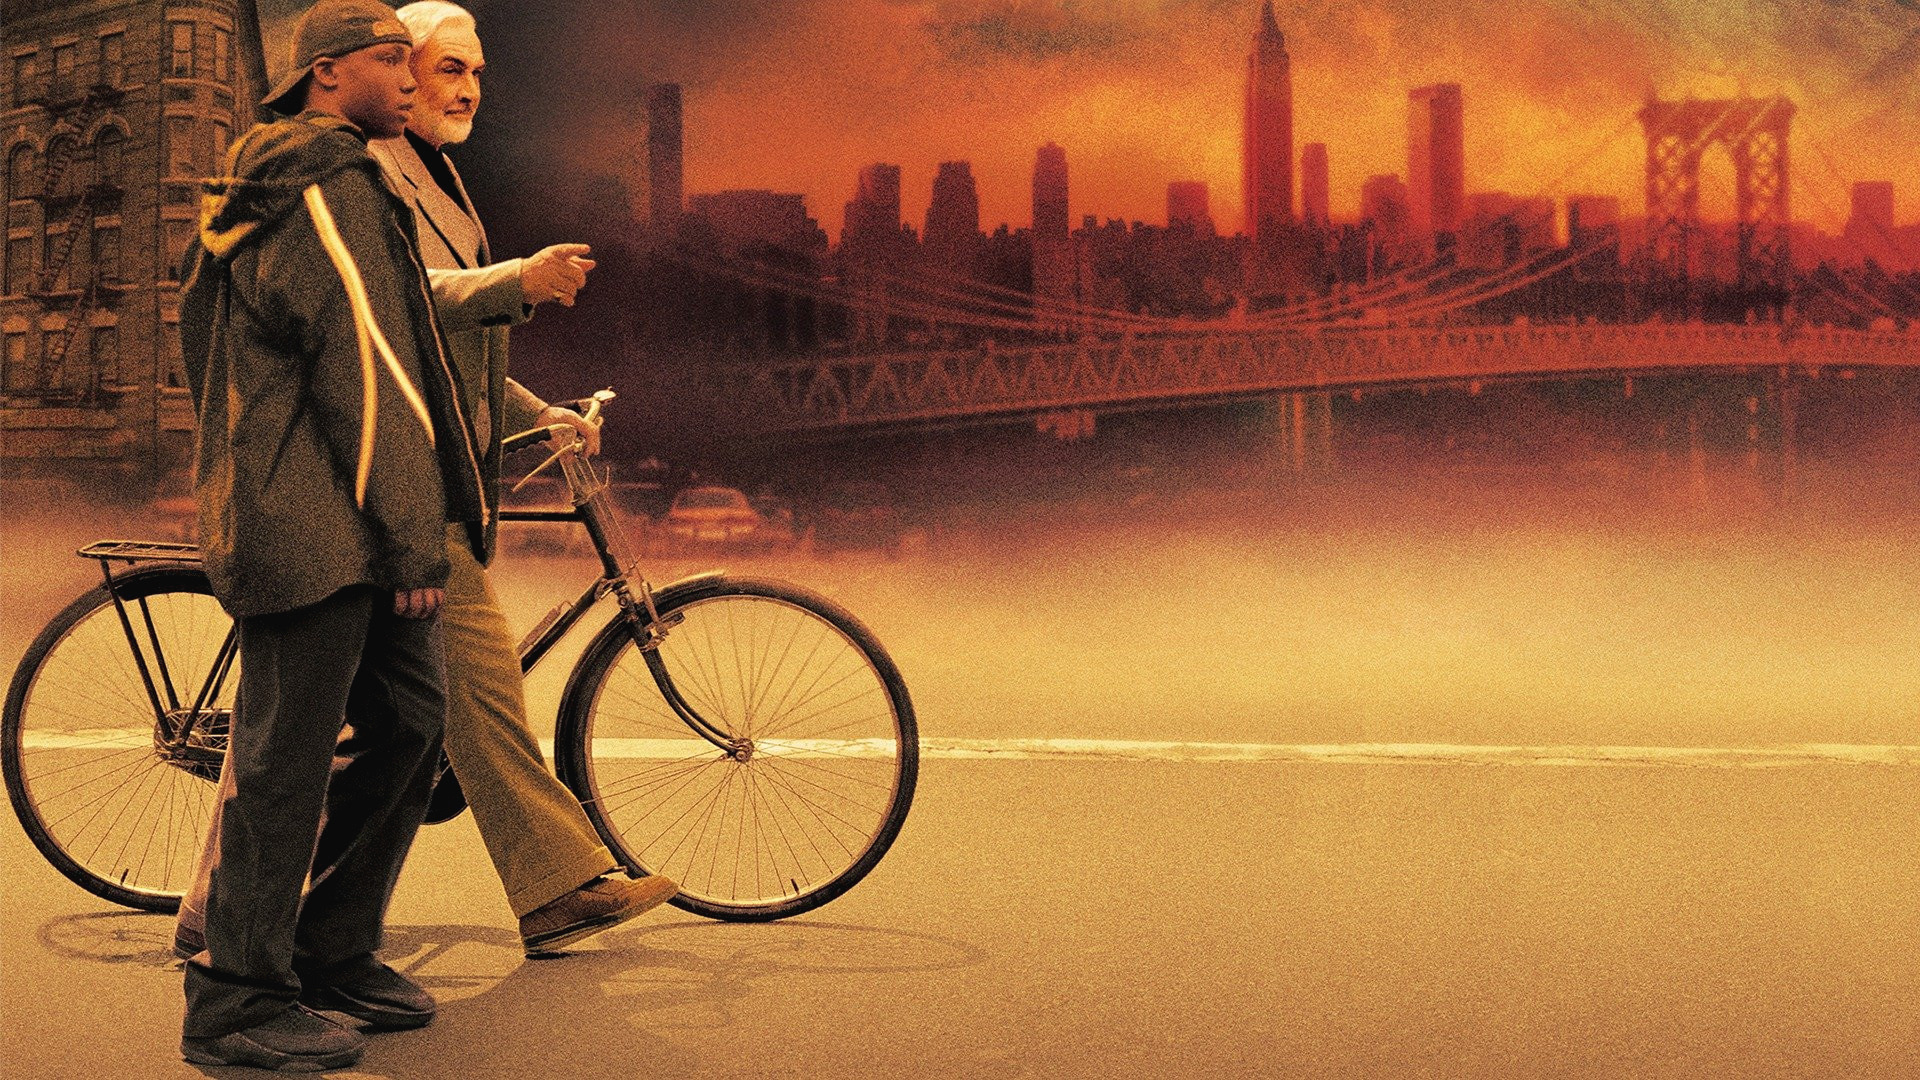 Finding Forrester: American drama film, written by Mike Rich, 2000. 1920x1080 Full HD Wallpaper.